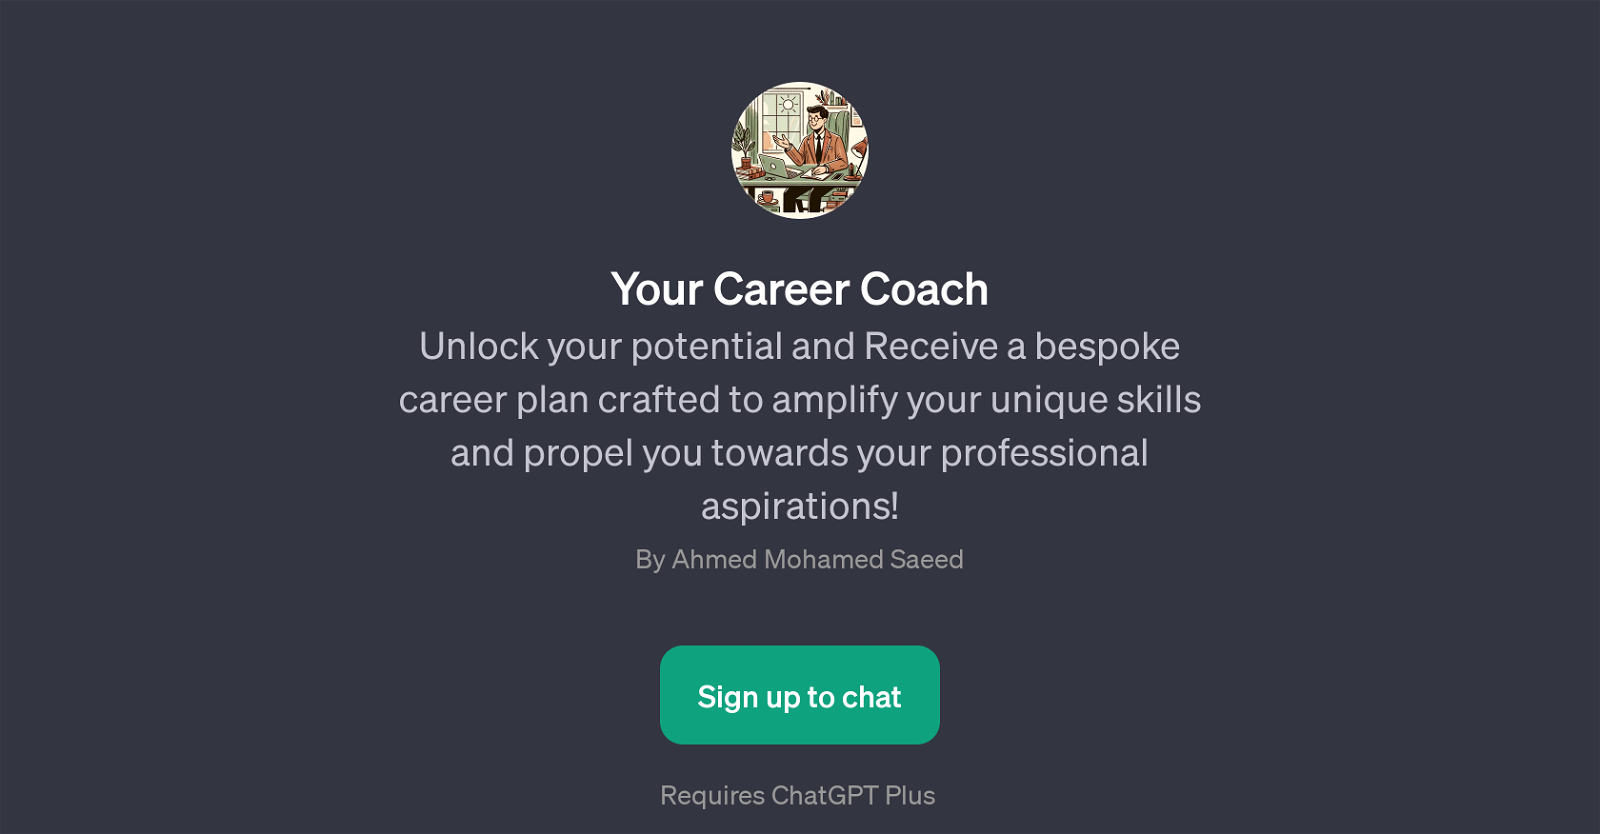 Your Career Coach website